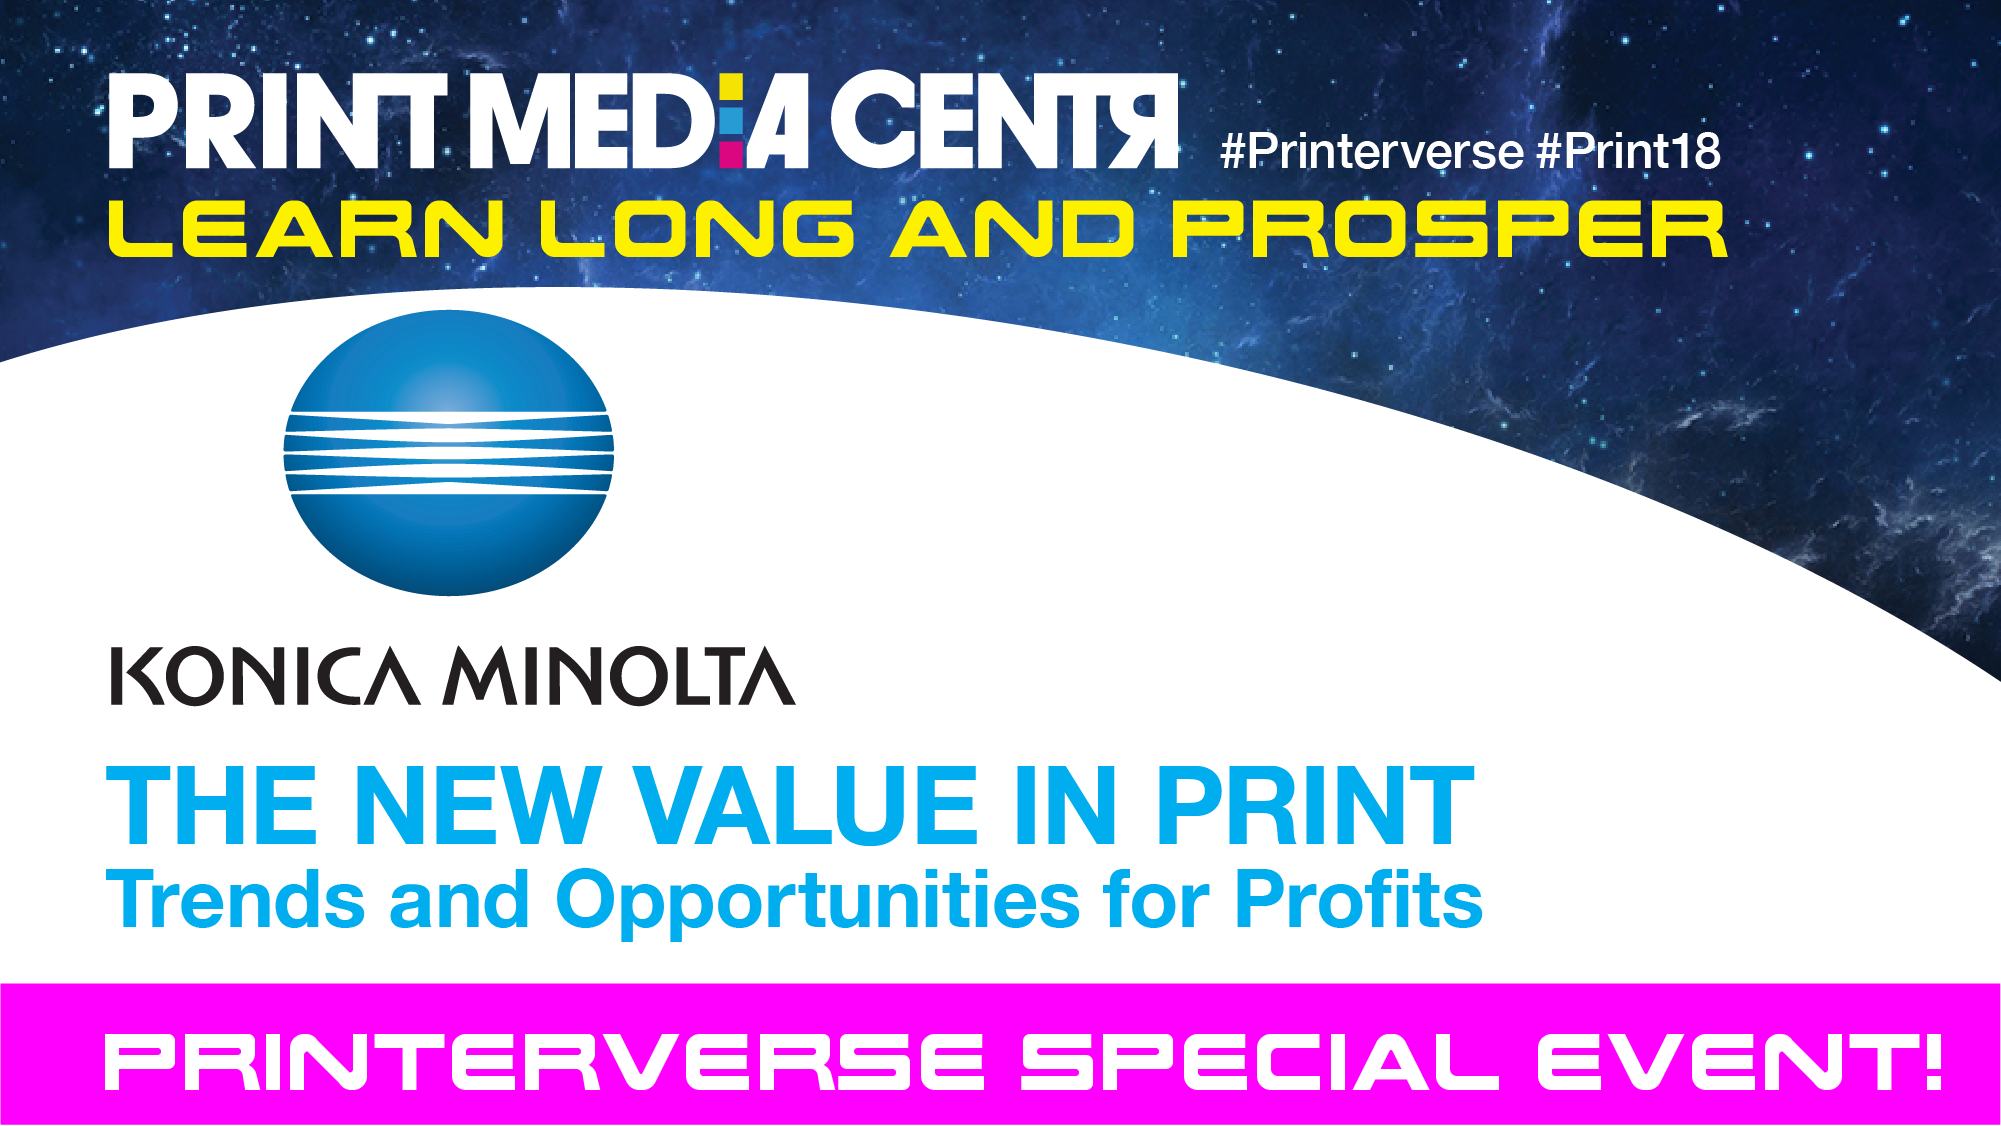 Konica Minolta Print Media Centr